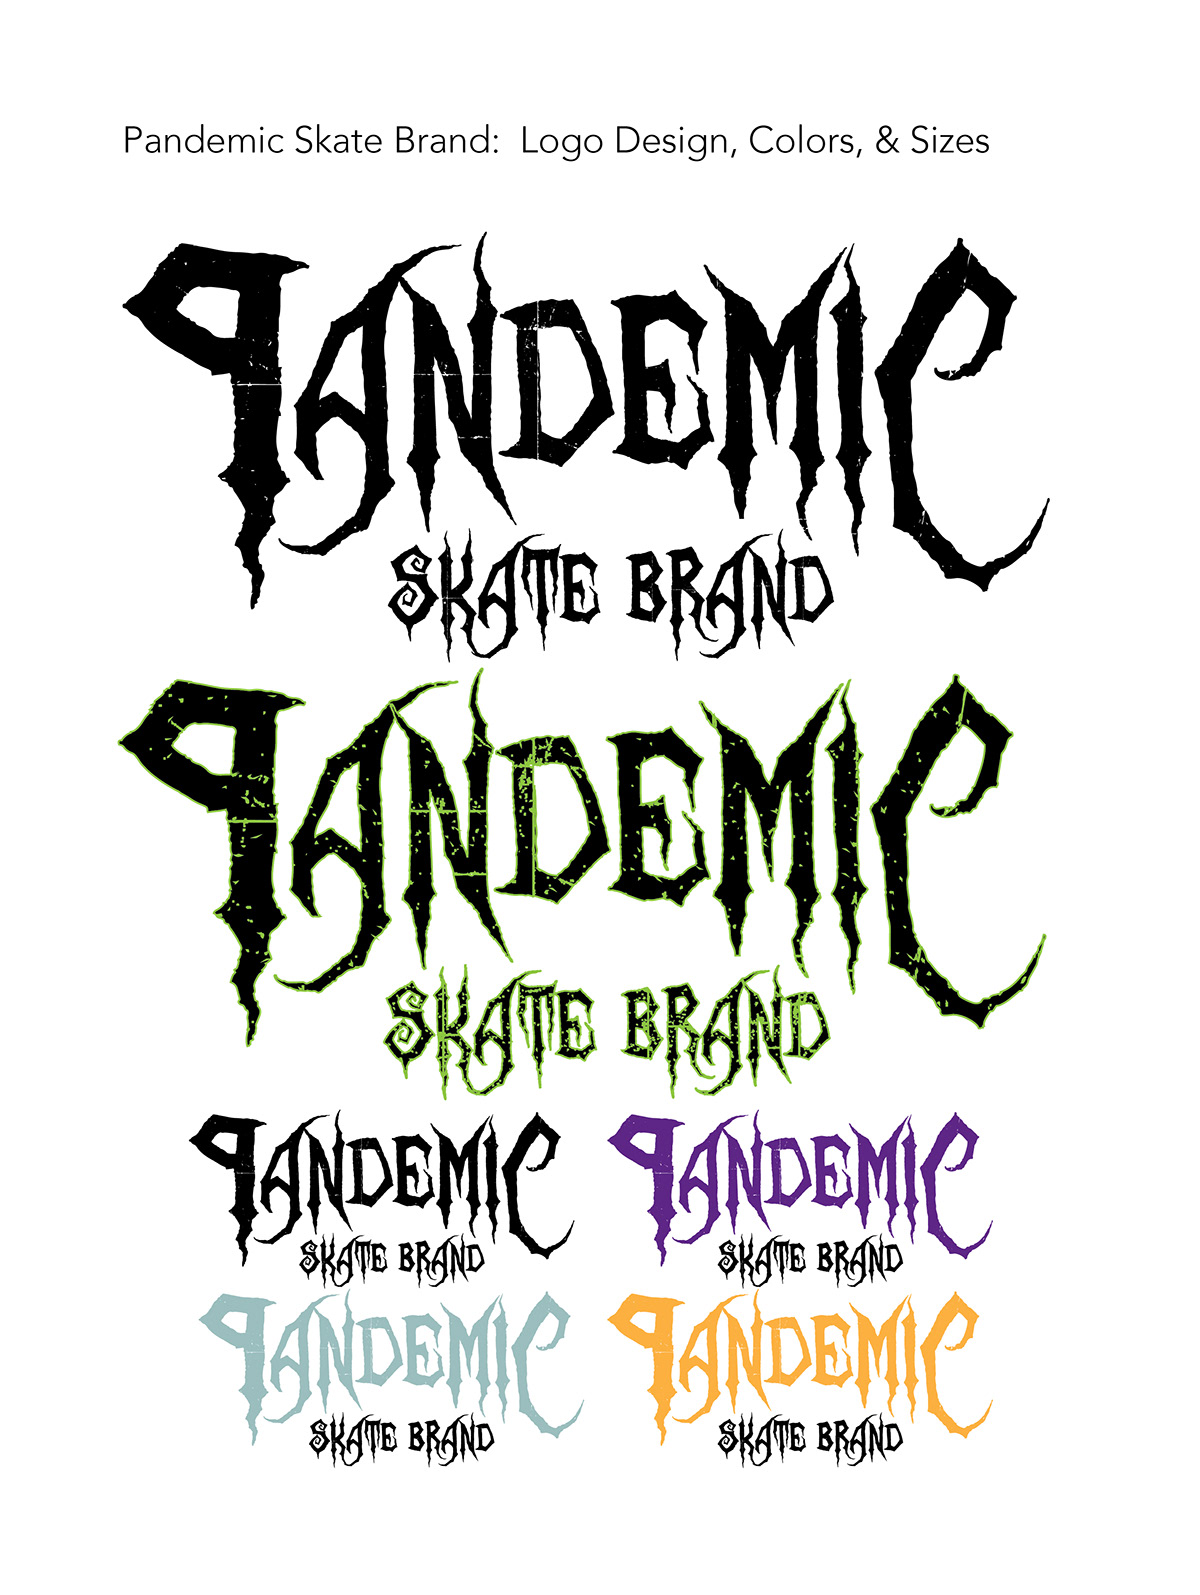 pin-ups sexy zombies skateboarding fashion illustration products t-shirts Illustrator pandemic